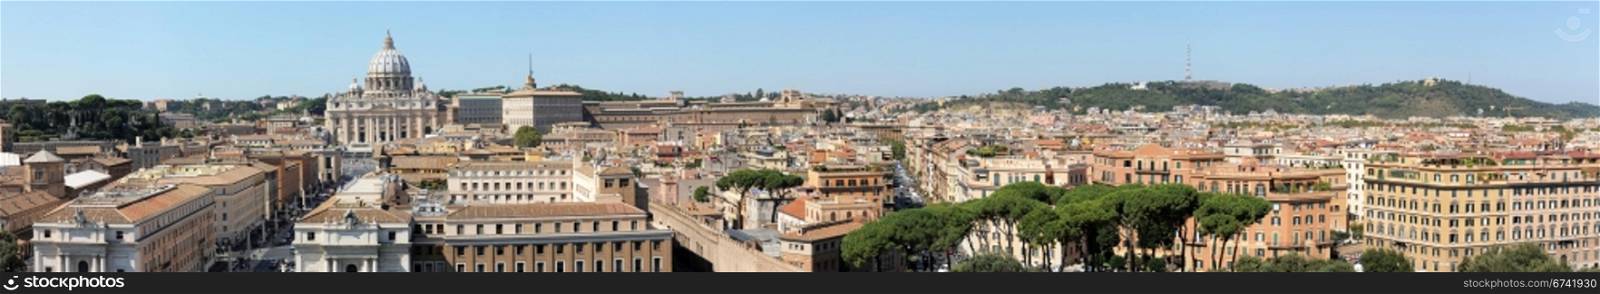 panorama of Rome and basilica Saint Peter